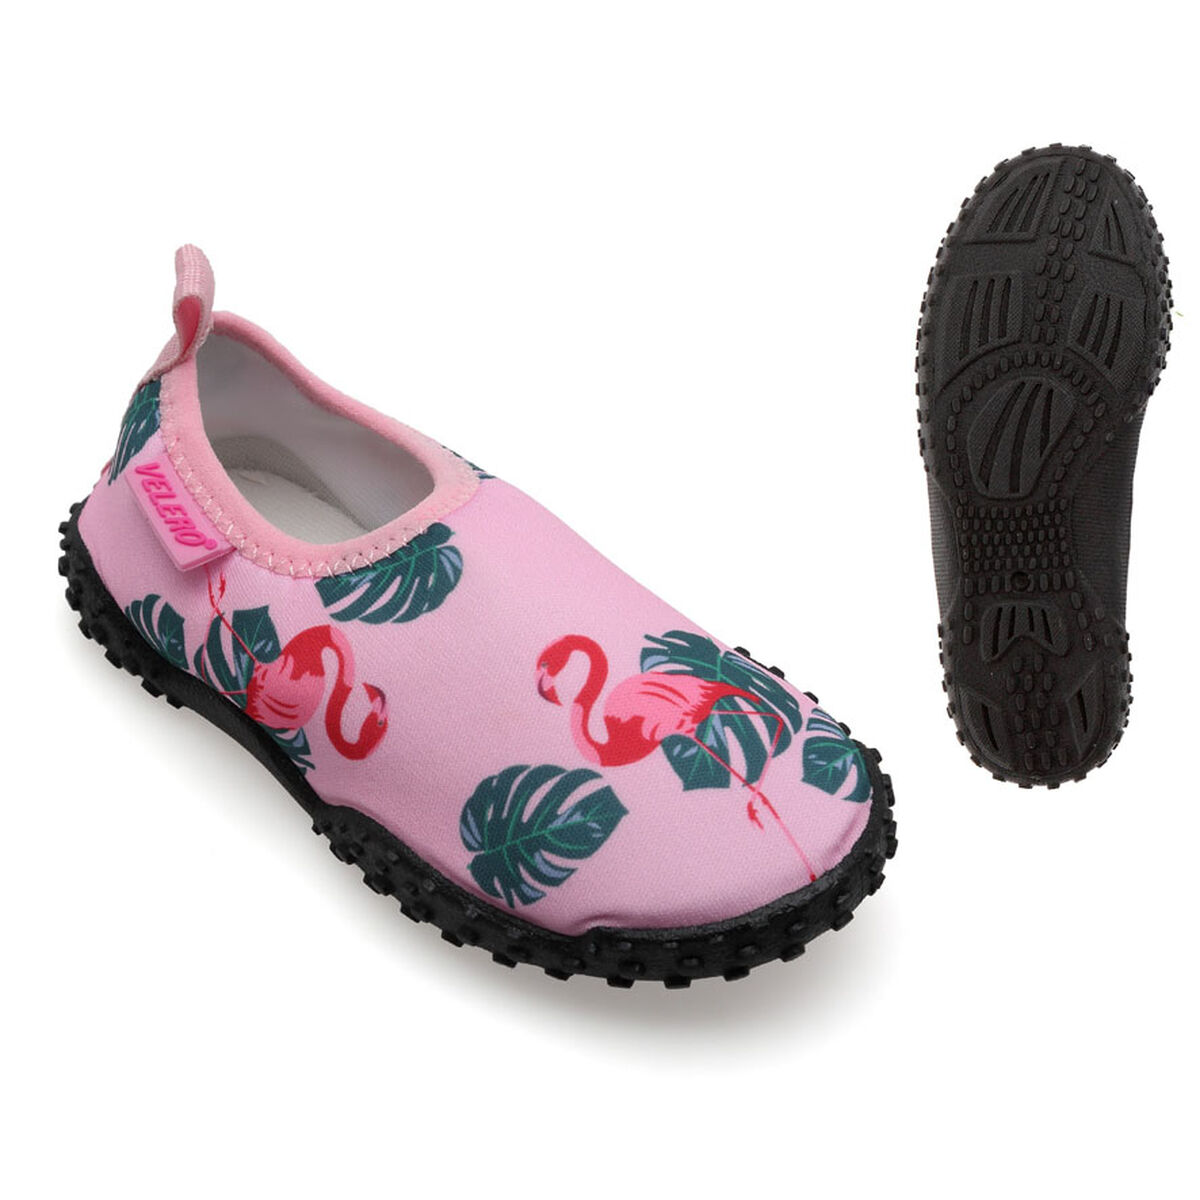 Botoși pentru Copii Flamingo Roz - Mărime la picior 27